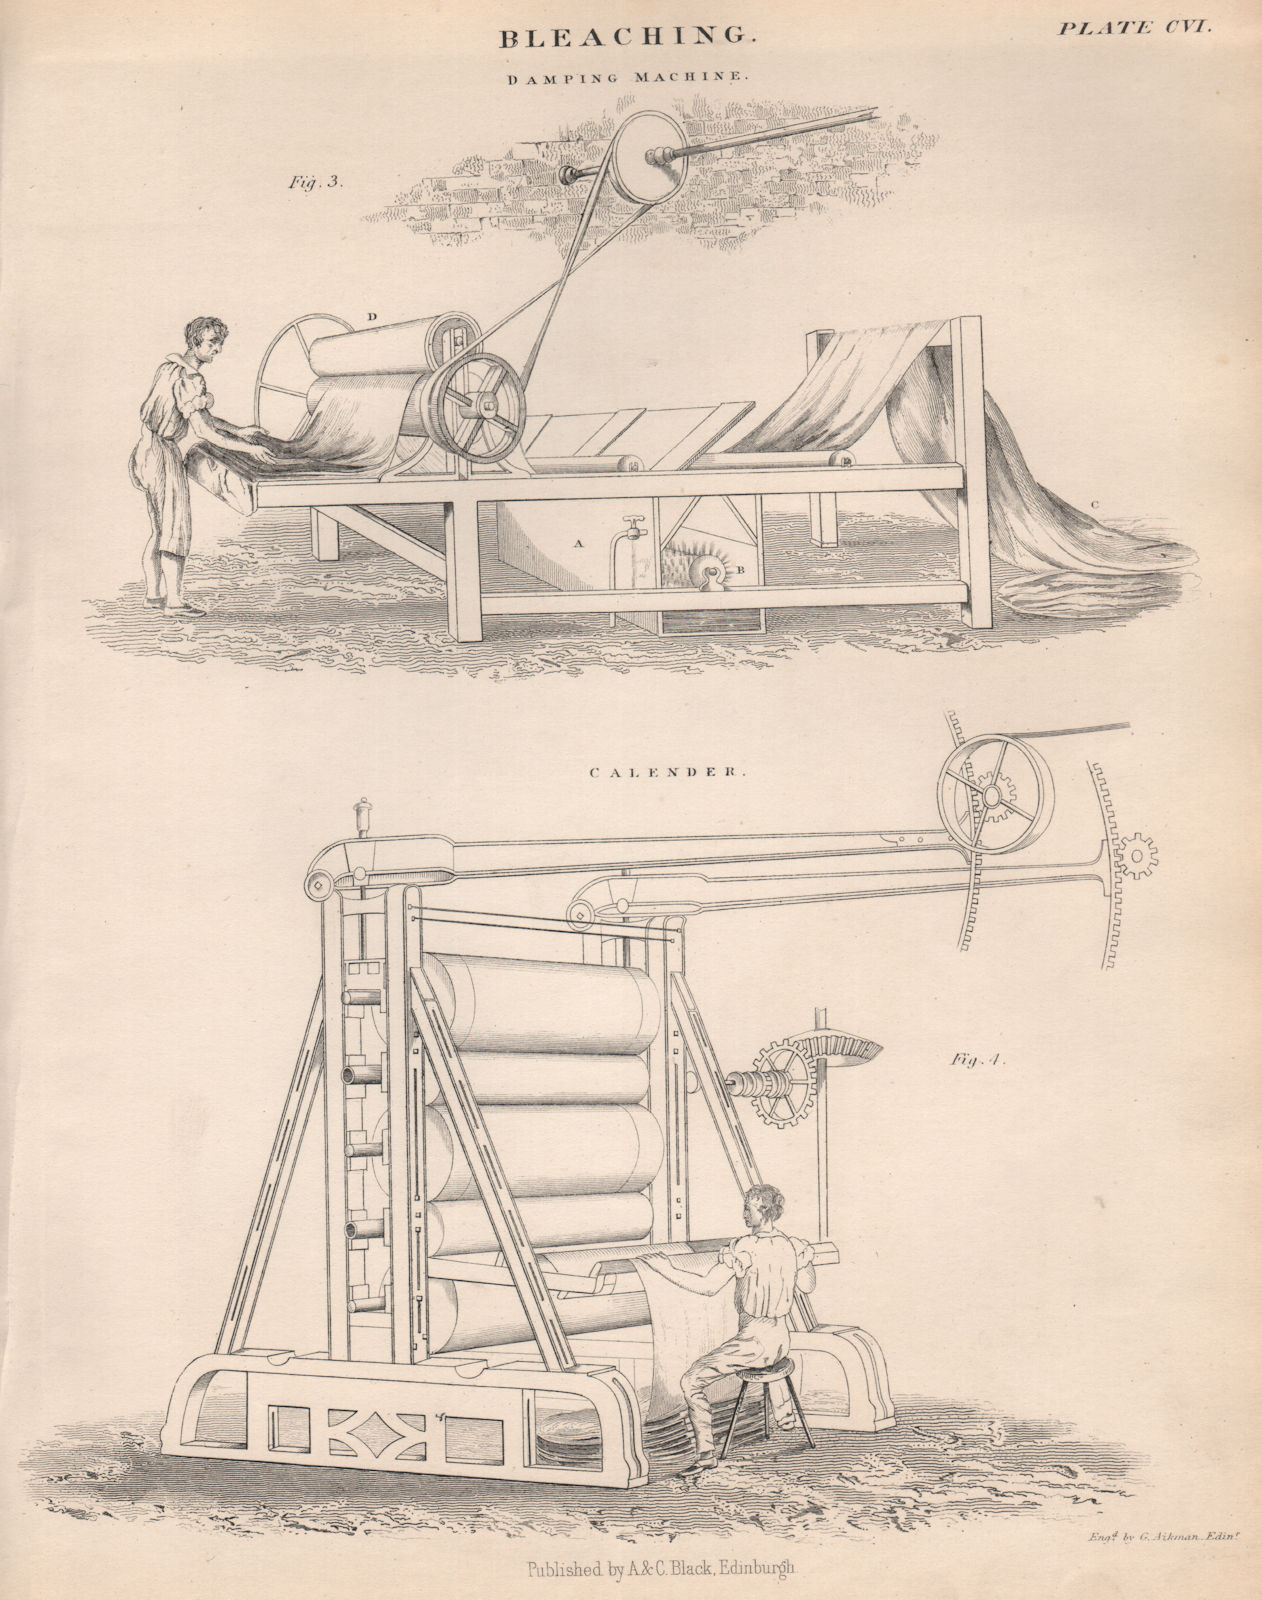 Bleaching. Damping Machine; Calender. Victorian Engineering. BRITANNICA 1860